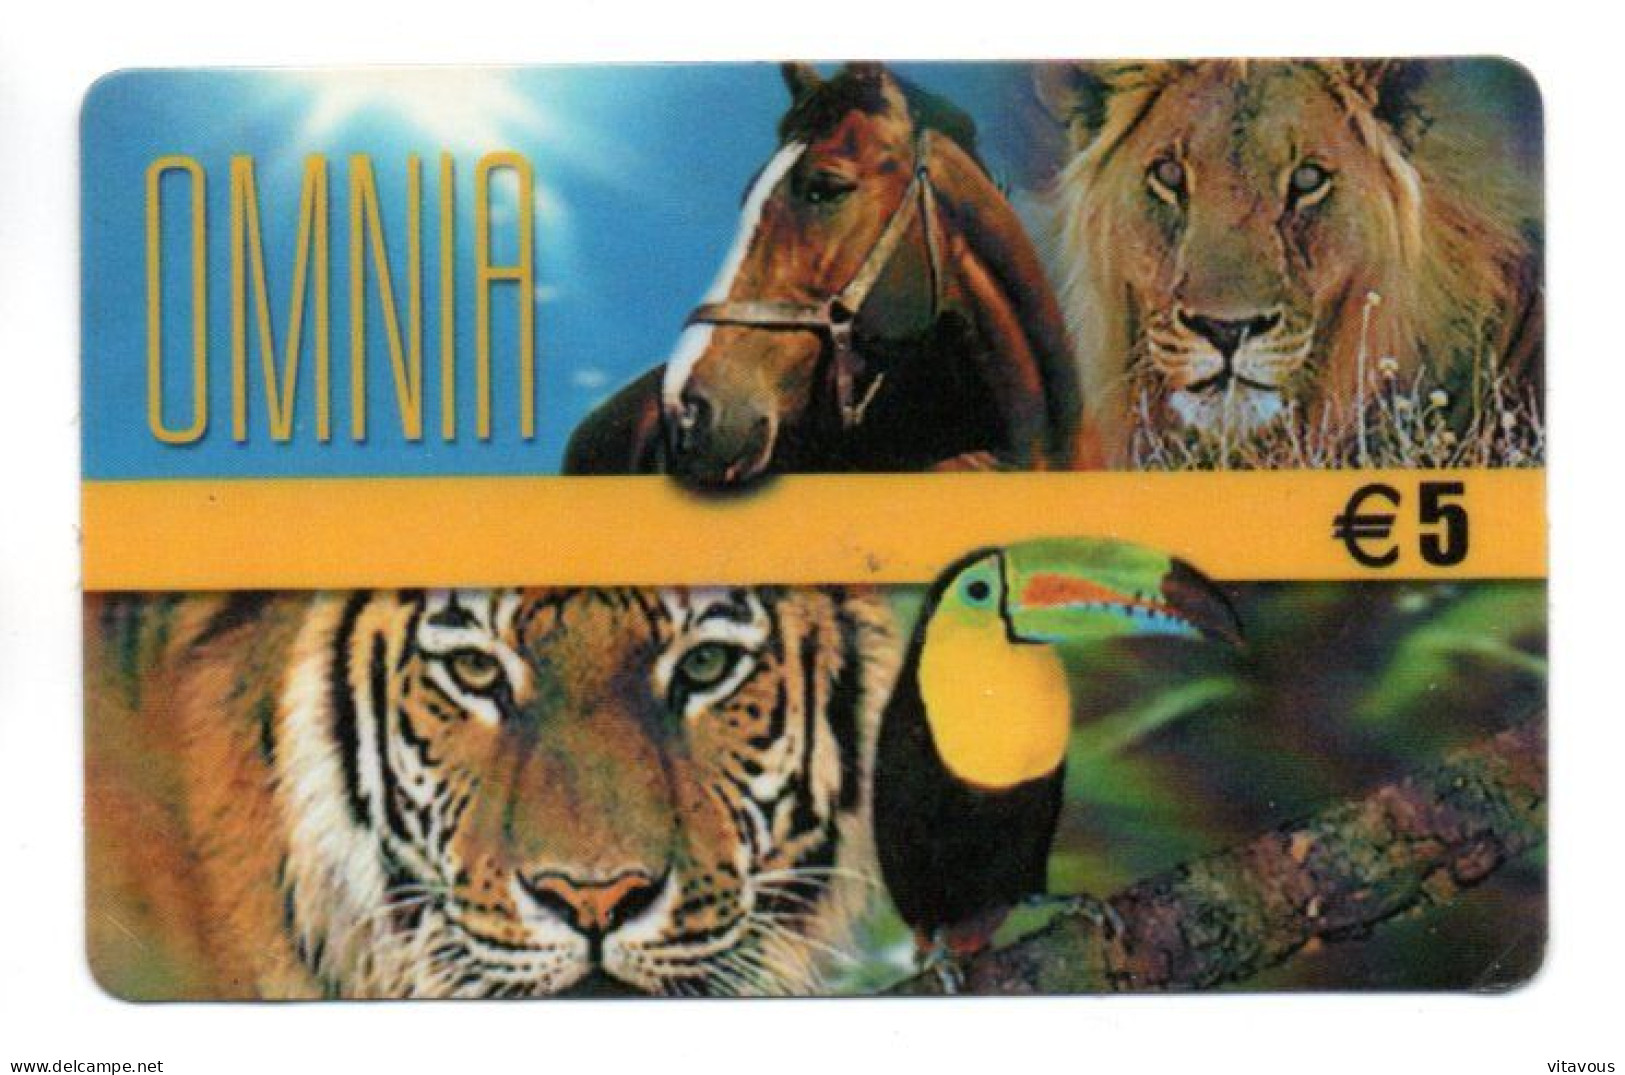 OMNIA Lion Tigre Cheval  Carte Prépayée Italie Card  Karte (K 233) - Schede GSM, Prepagate & Ricariche